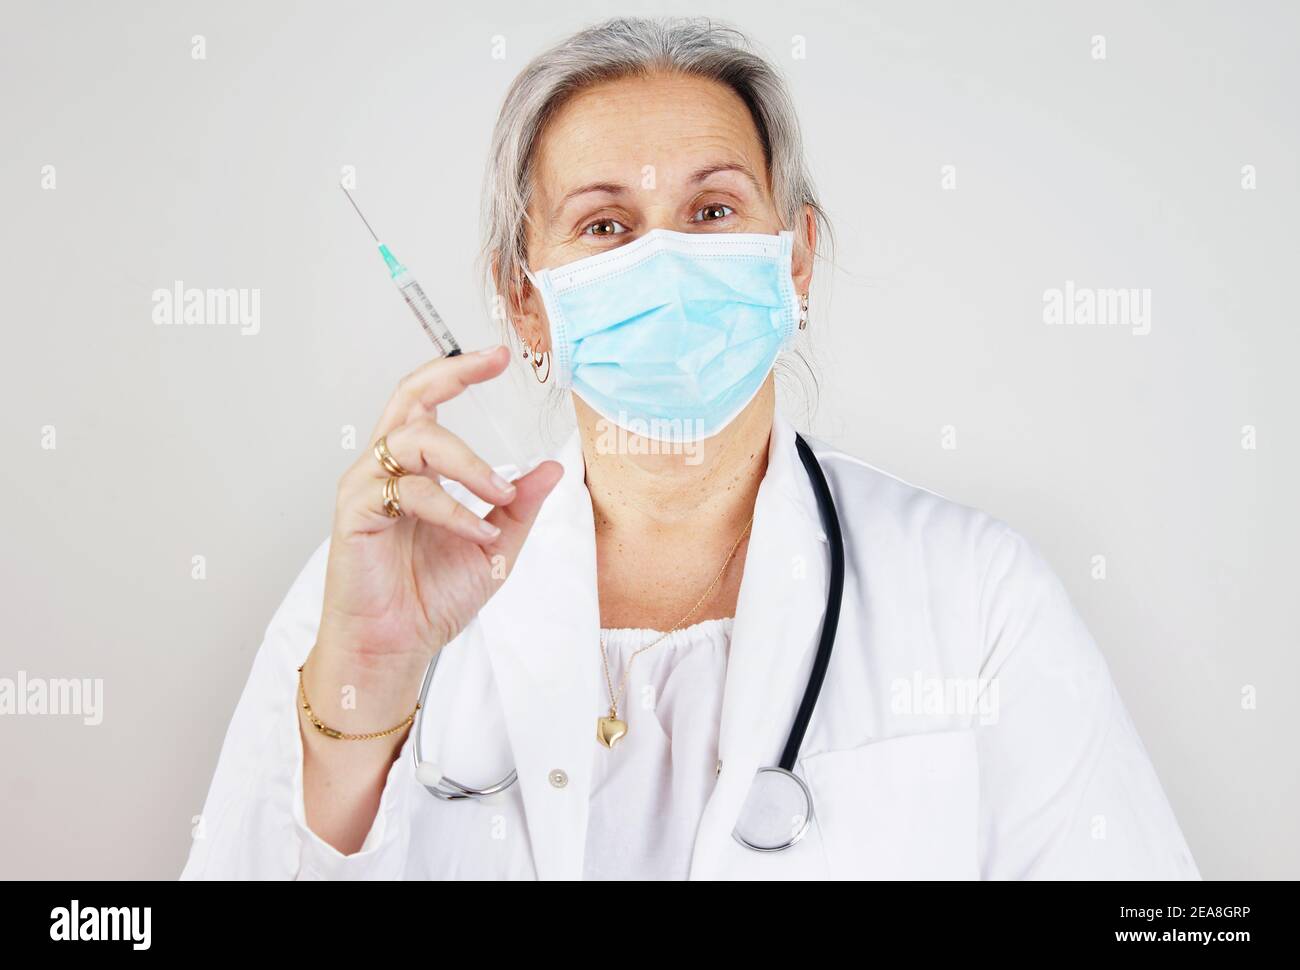 Doctor or nurse with masked and syringe Stock Photo